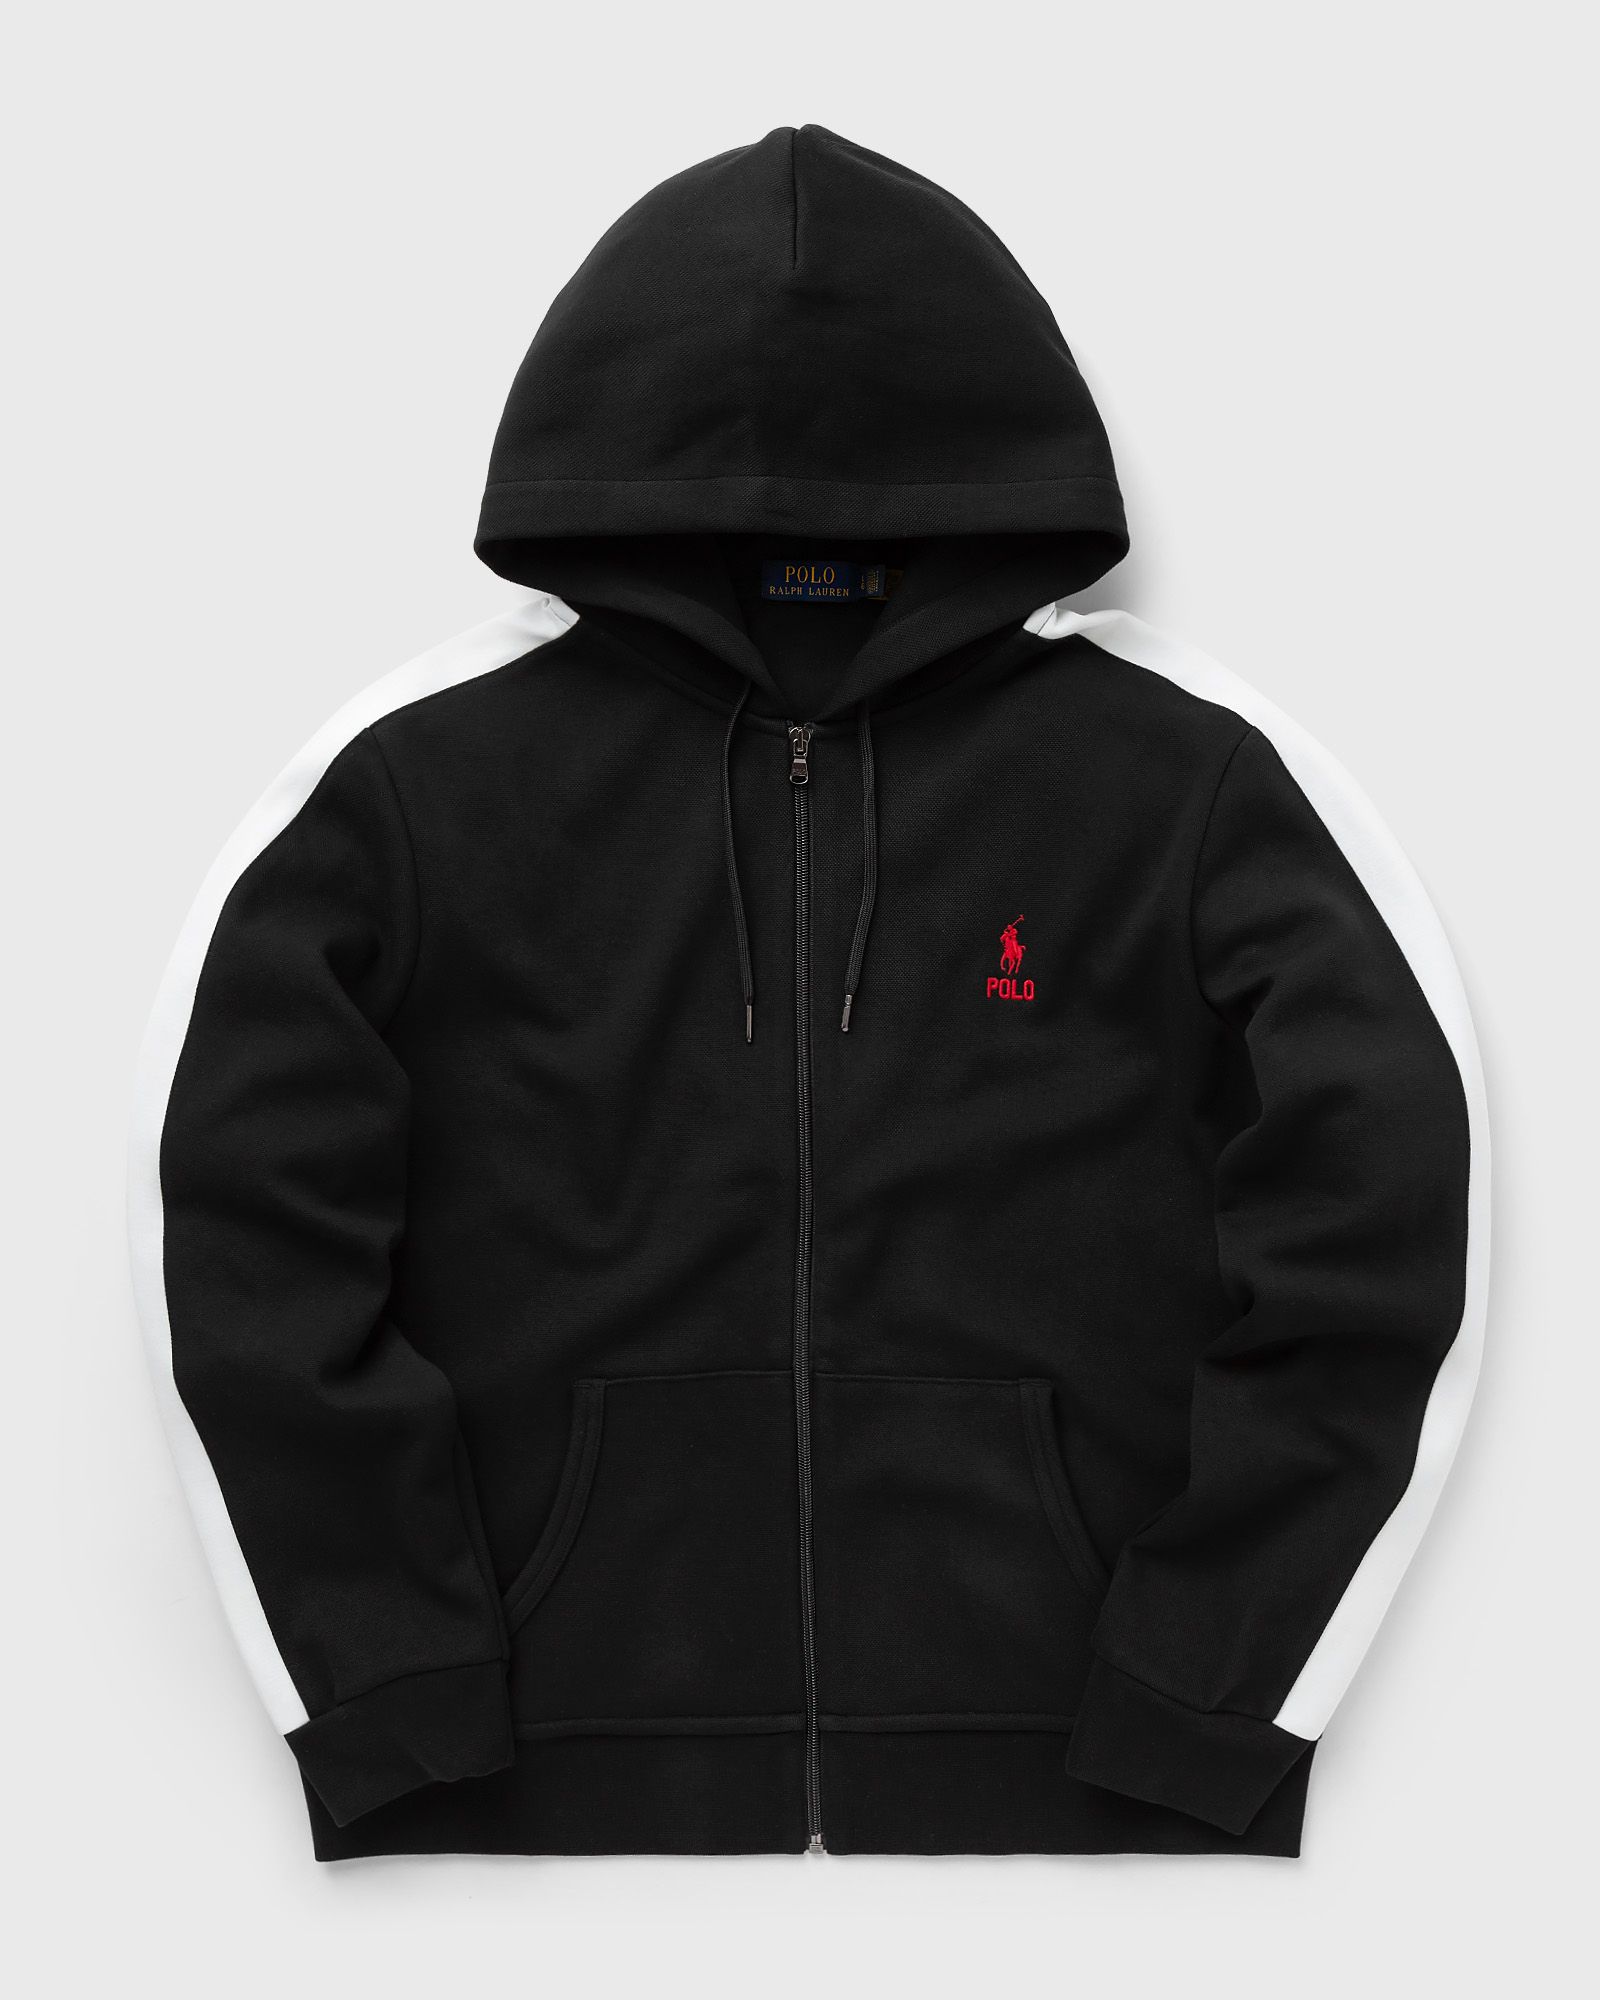 Polo Ralph Lauren - long sleeve-sweatshirt men hoodies|zippers black in größe:xl